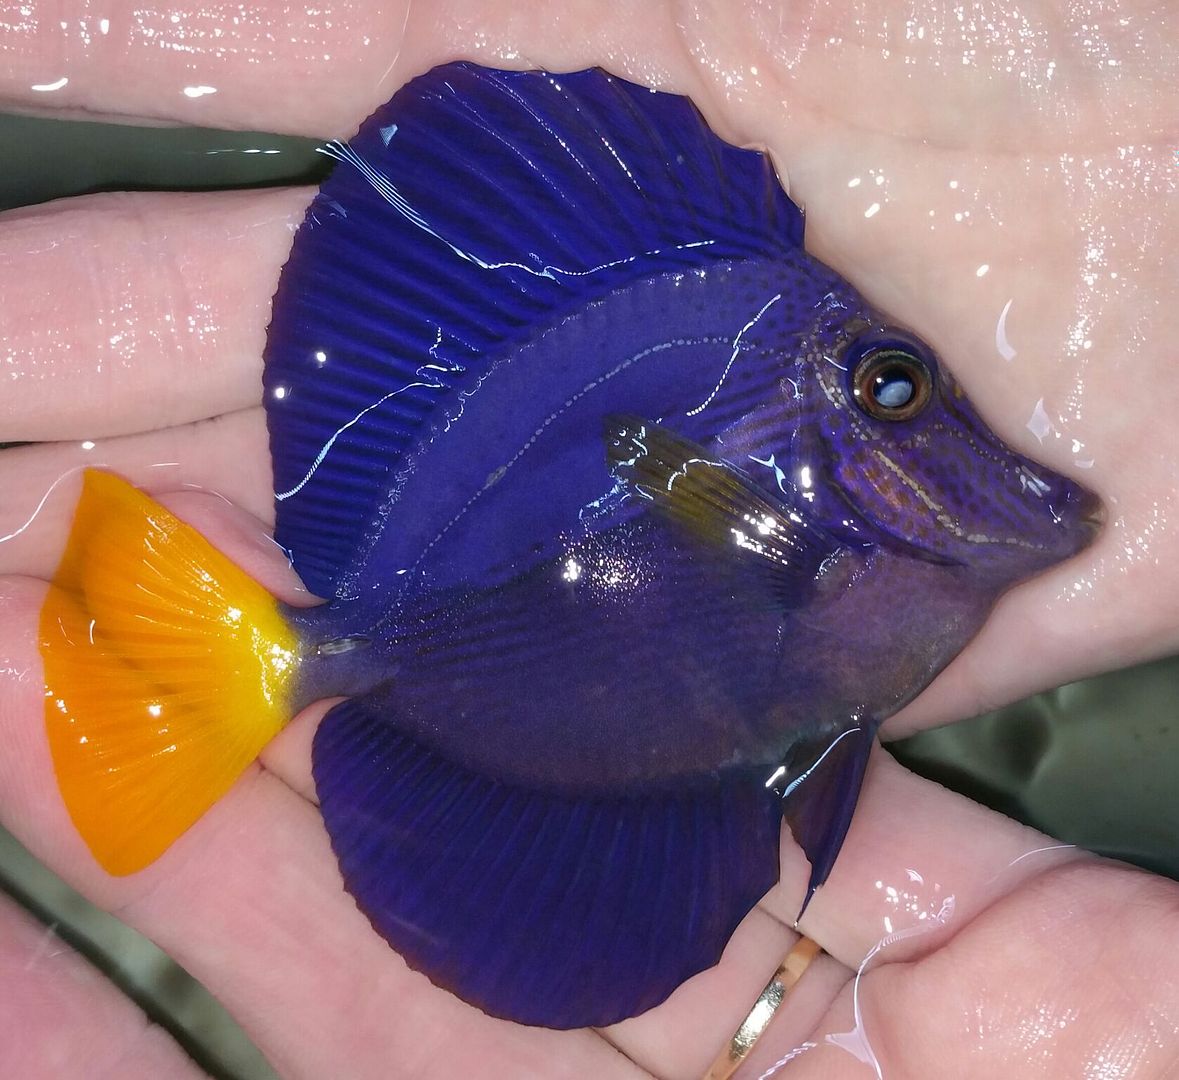 unspecified zps5nlfqsnz - Purple Tangs $99.99! Purple Firefish $19.99!! Sweet Angels!!!!